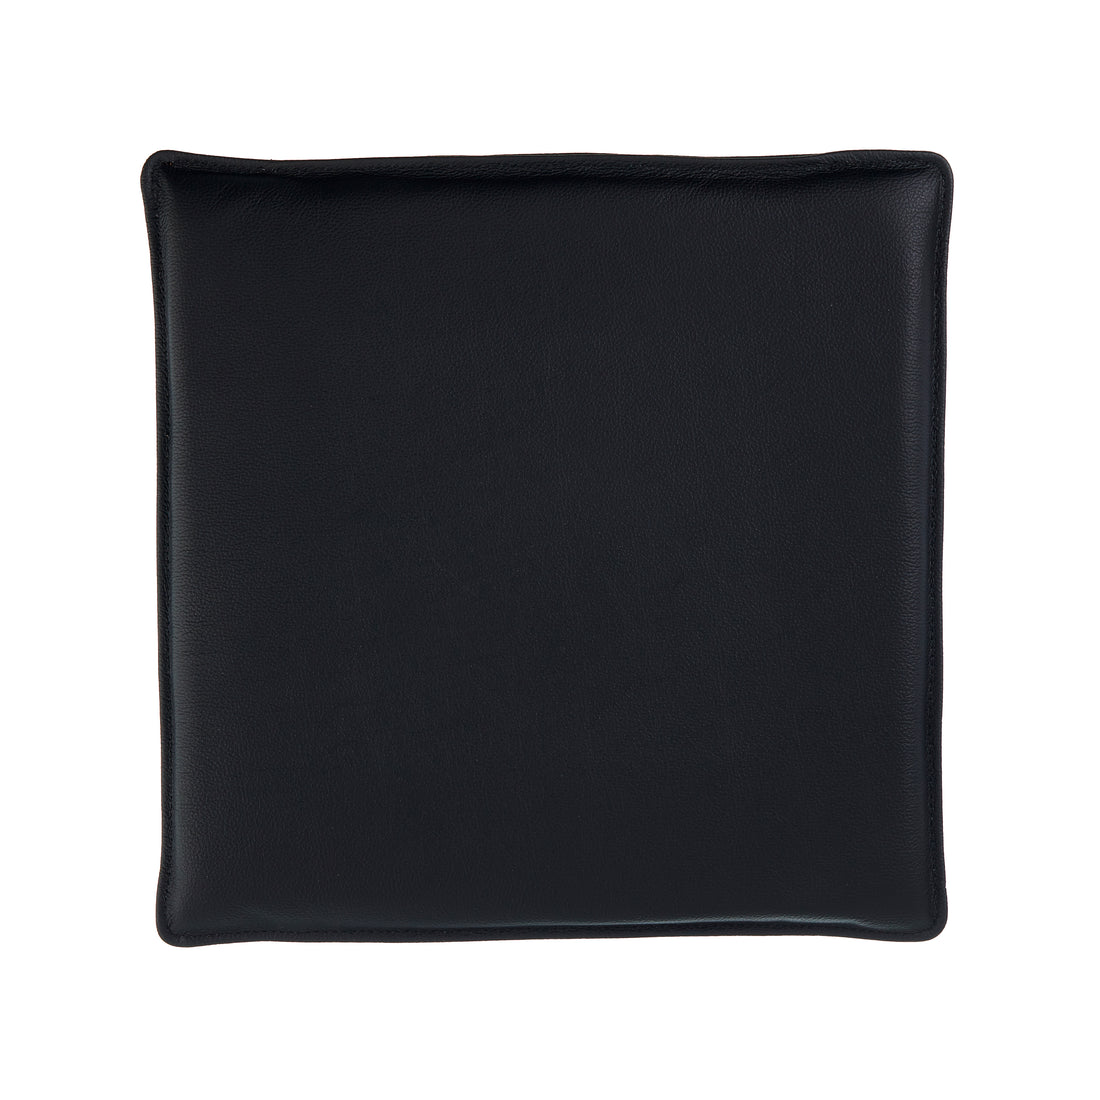 Universal kudde 40x40 cm i svart läder utan knappar